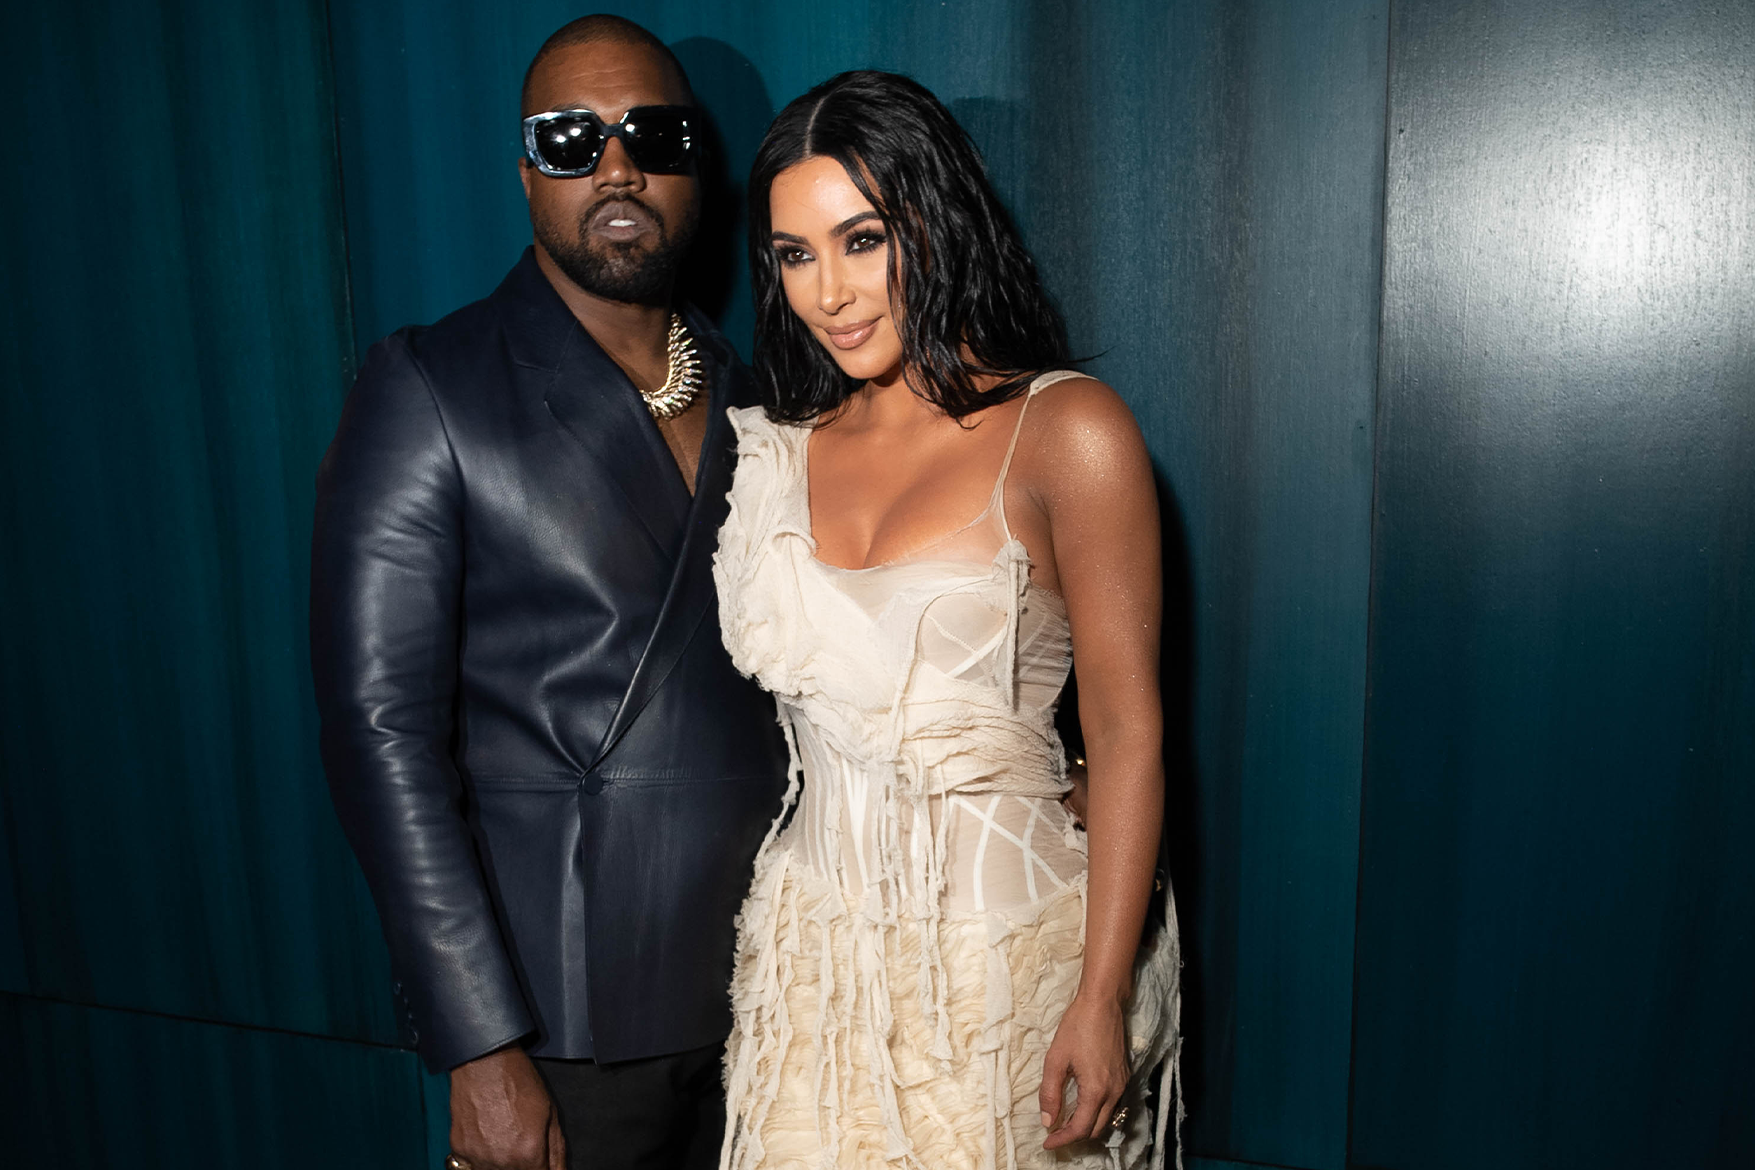 Kim-Kardashian-wore-Balenciaga-wedding-gown-guest-Kanye-West-Donda-event-01